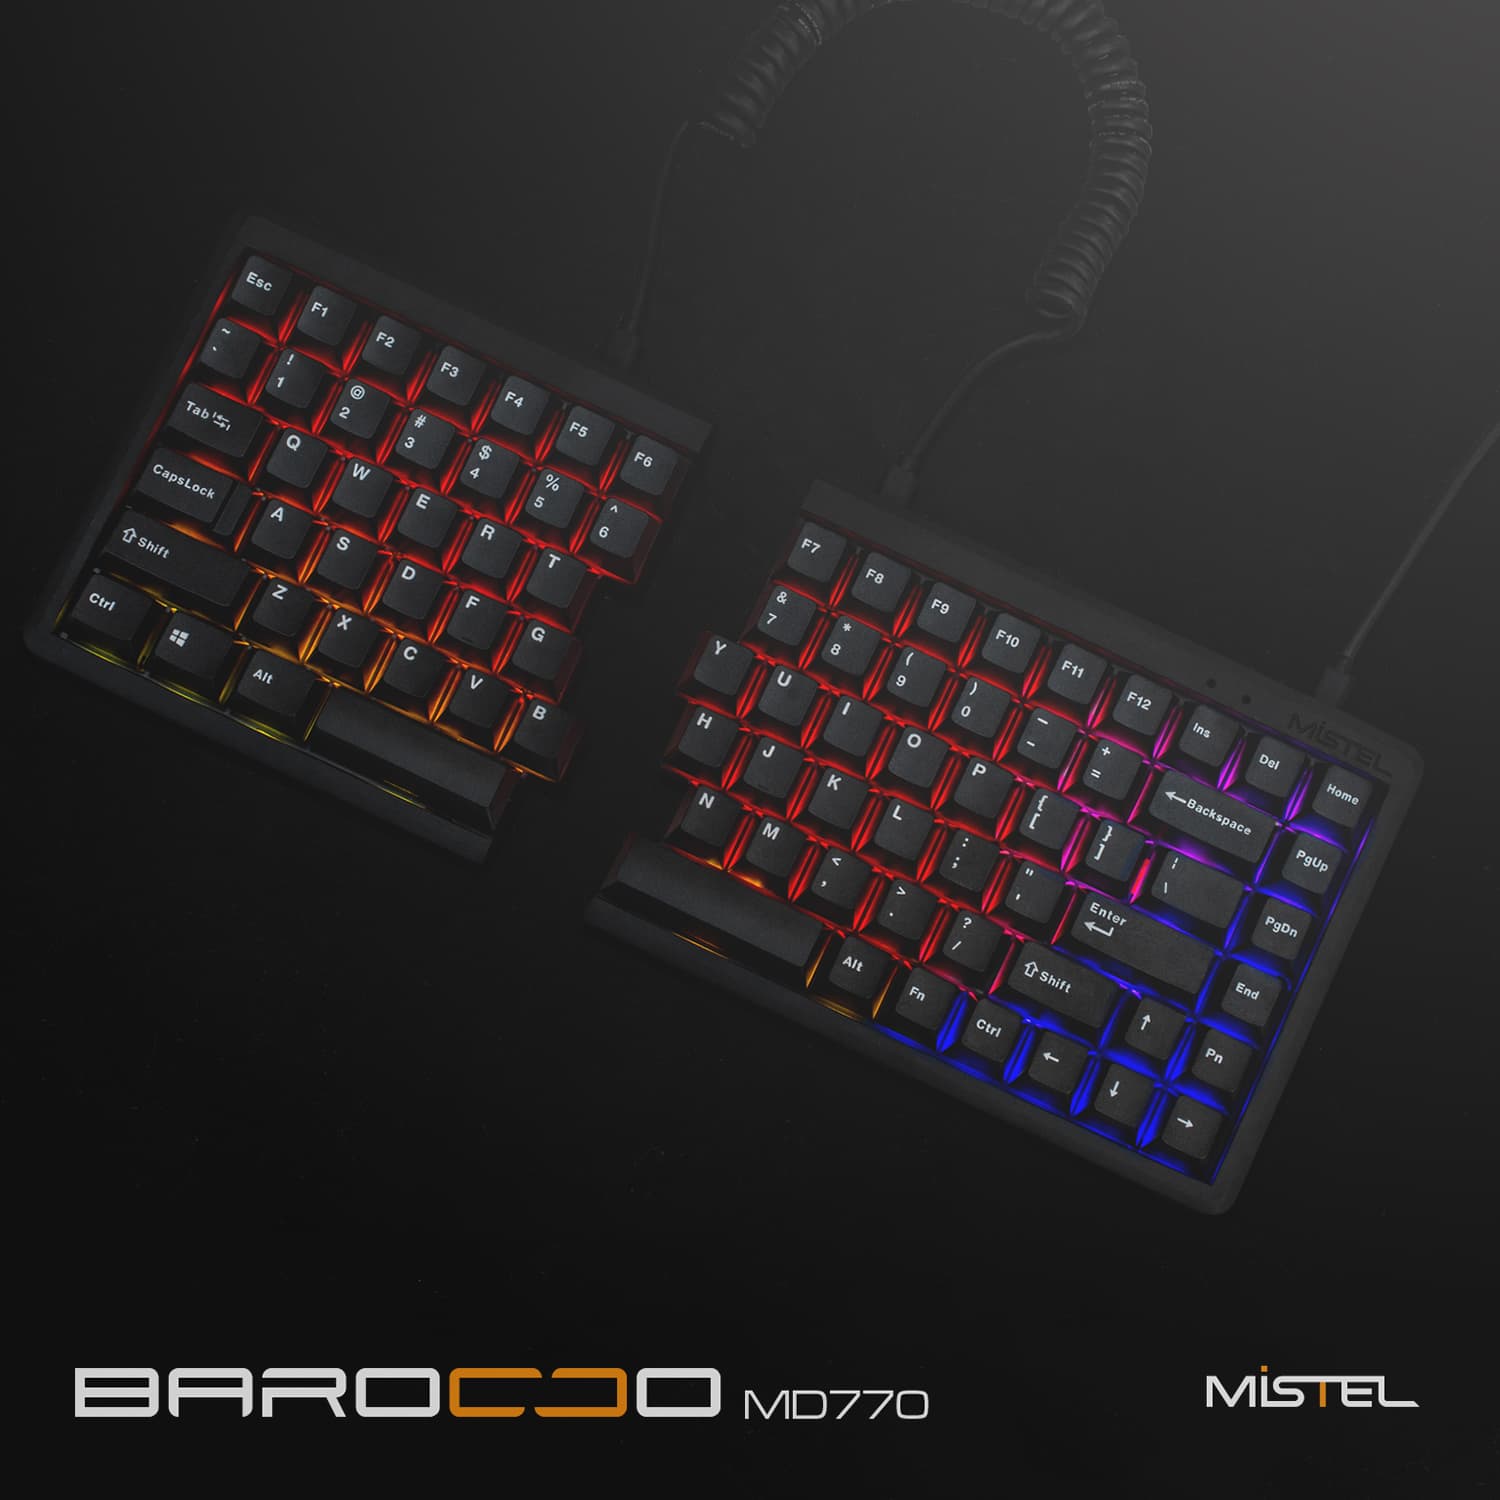 Mistel BAROCCO MD770 RGB キーボード - 株式会社アーキサイト